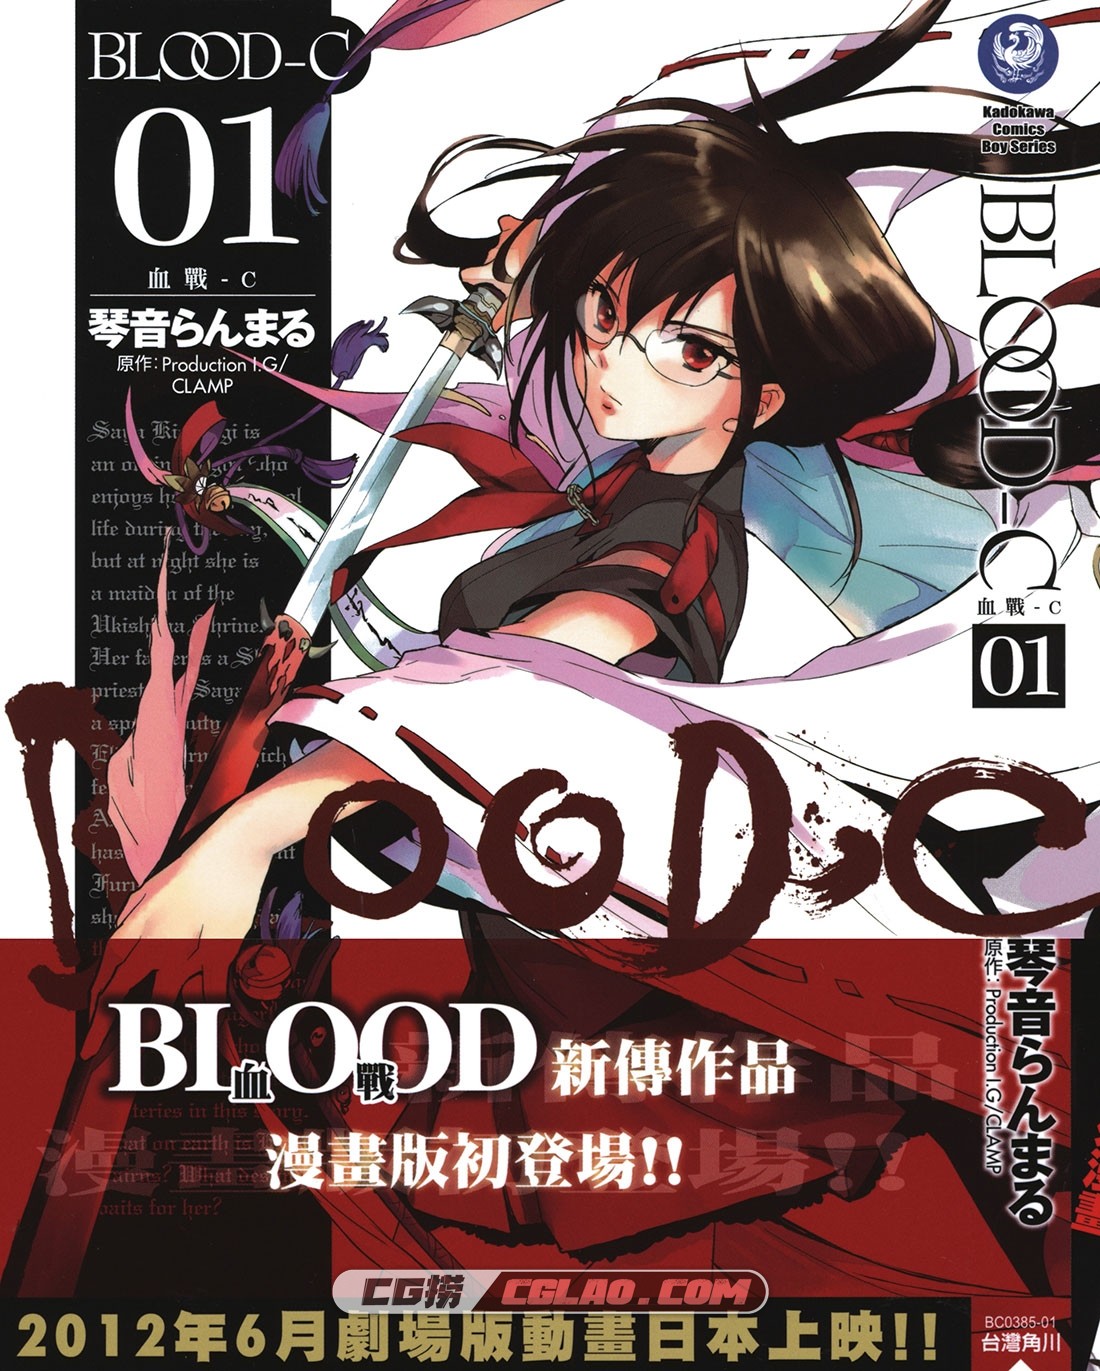 BLOOD-C  血战-C 琴音らんまる 1-4卷 全集完结网盘下载漫画,Blood_C_001-000.jpg